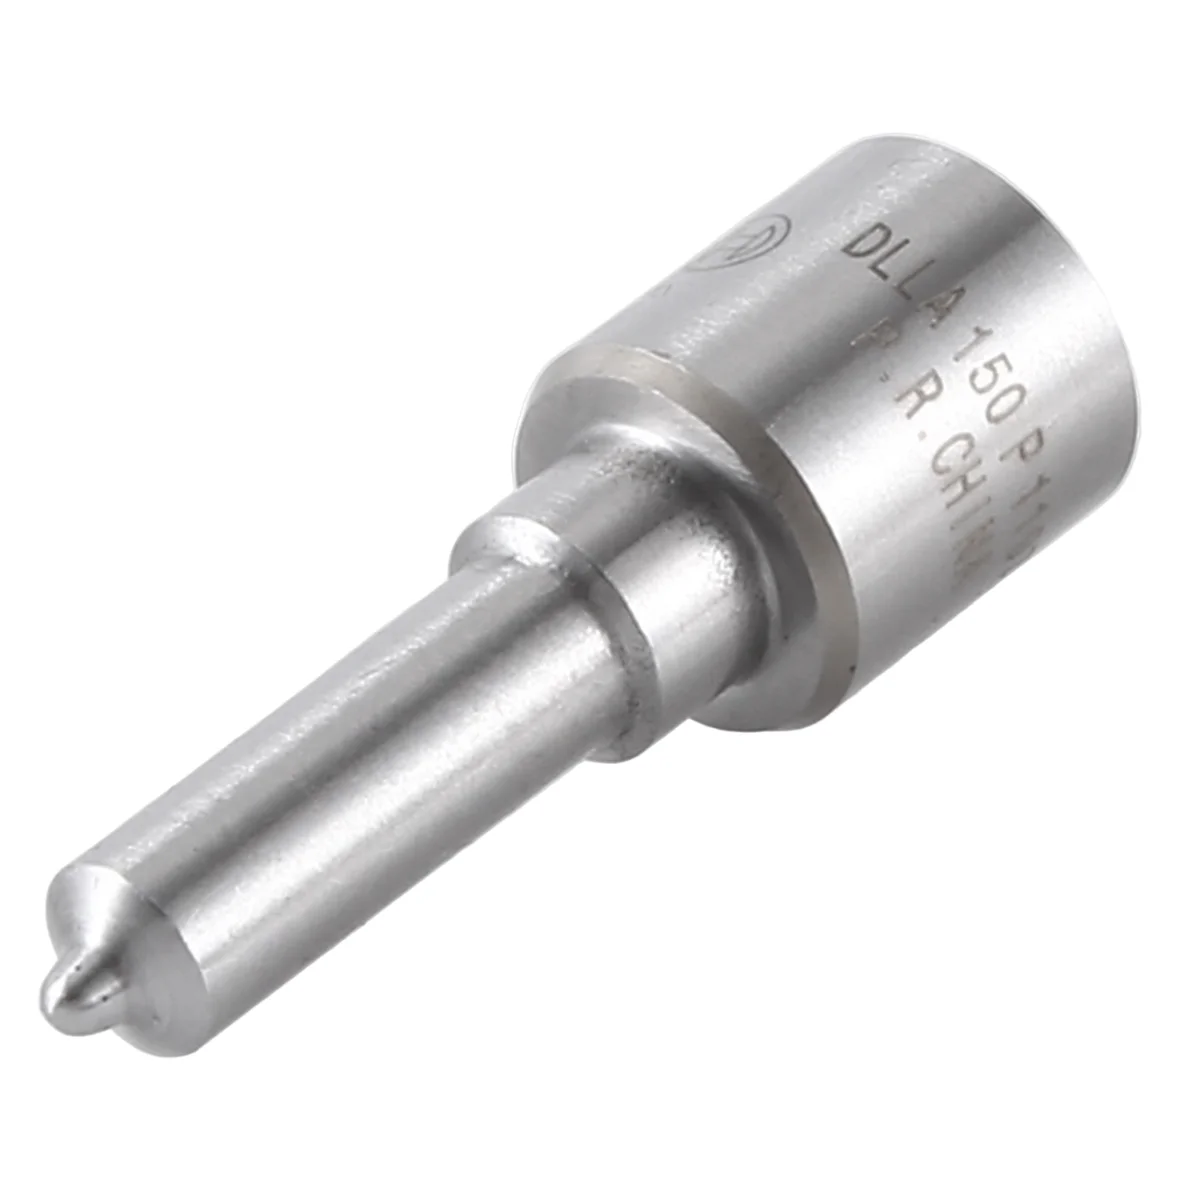 

DLLA150P1197 New Crude Oil Common Rail Injector Nozzle Fuel Sprayer for Injector